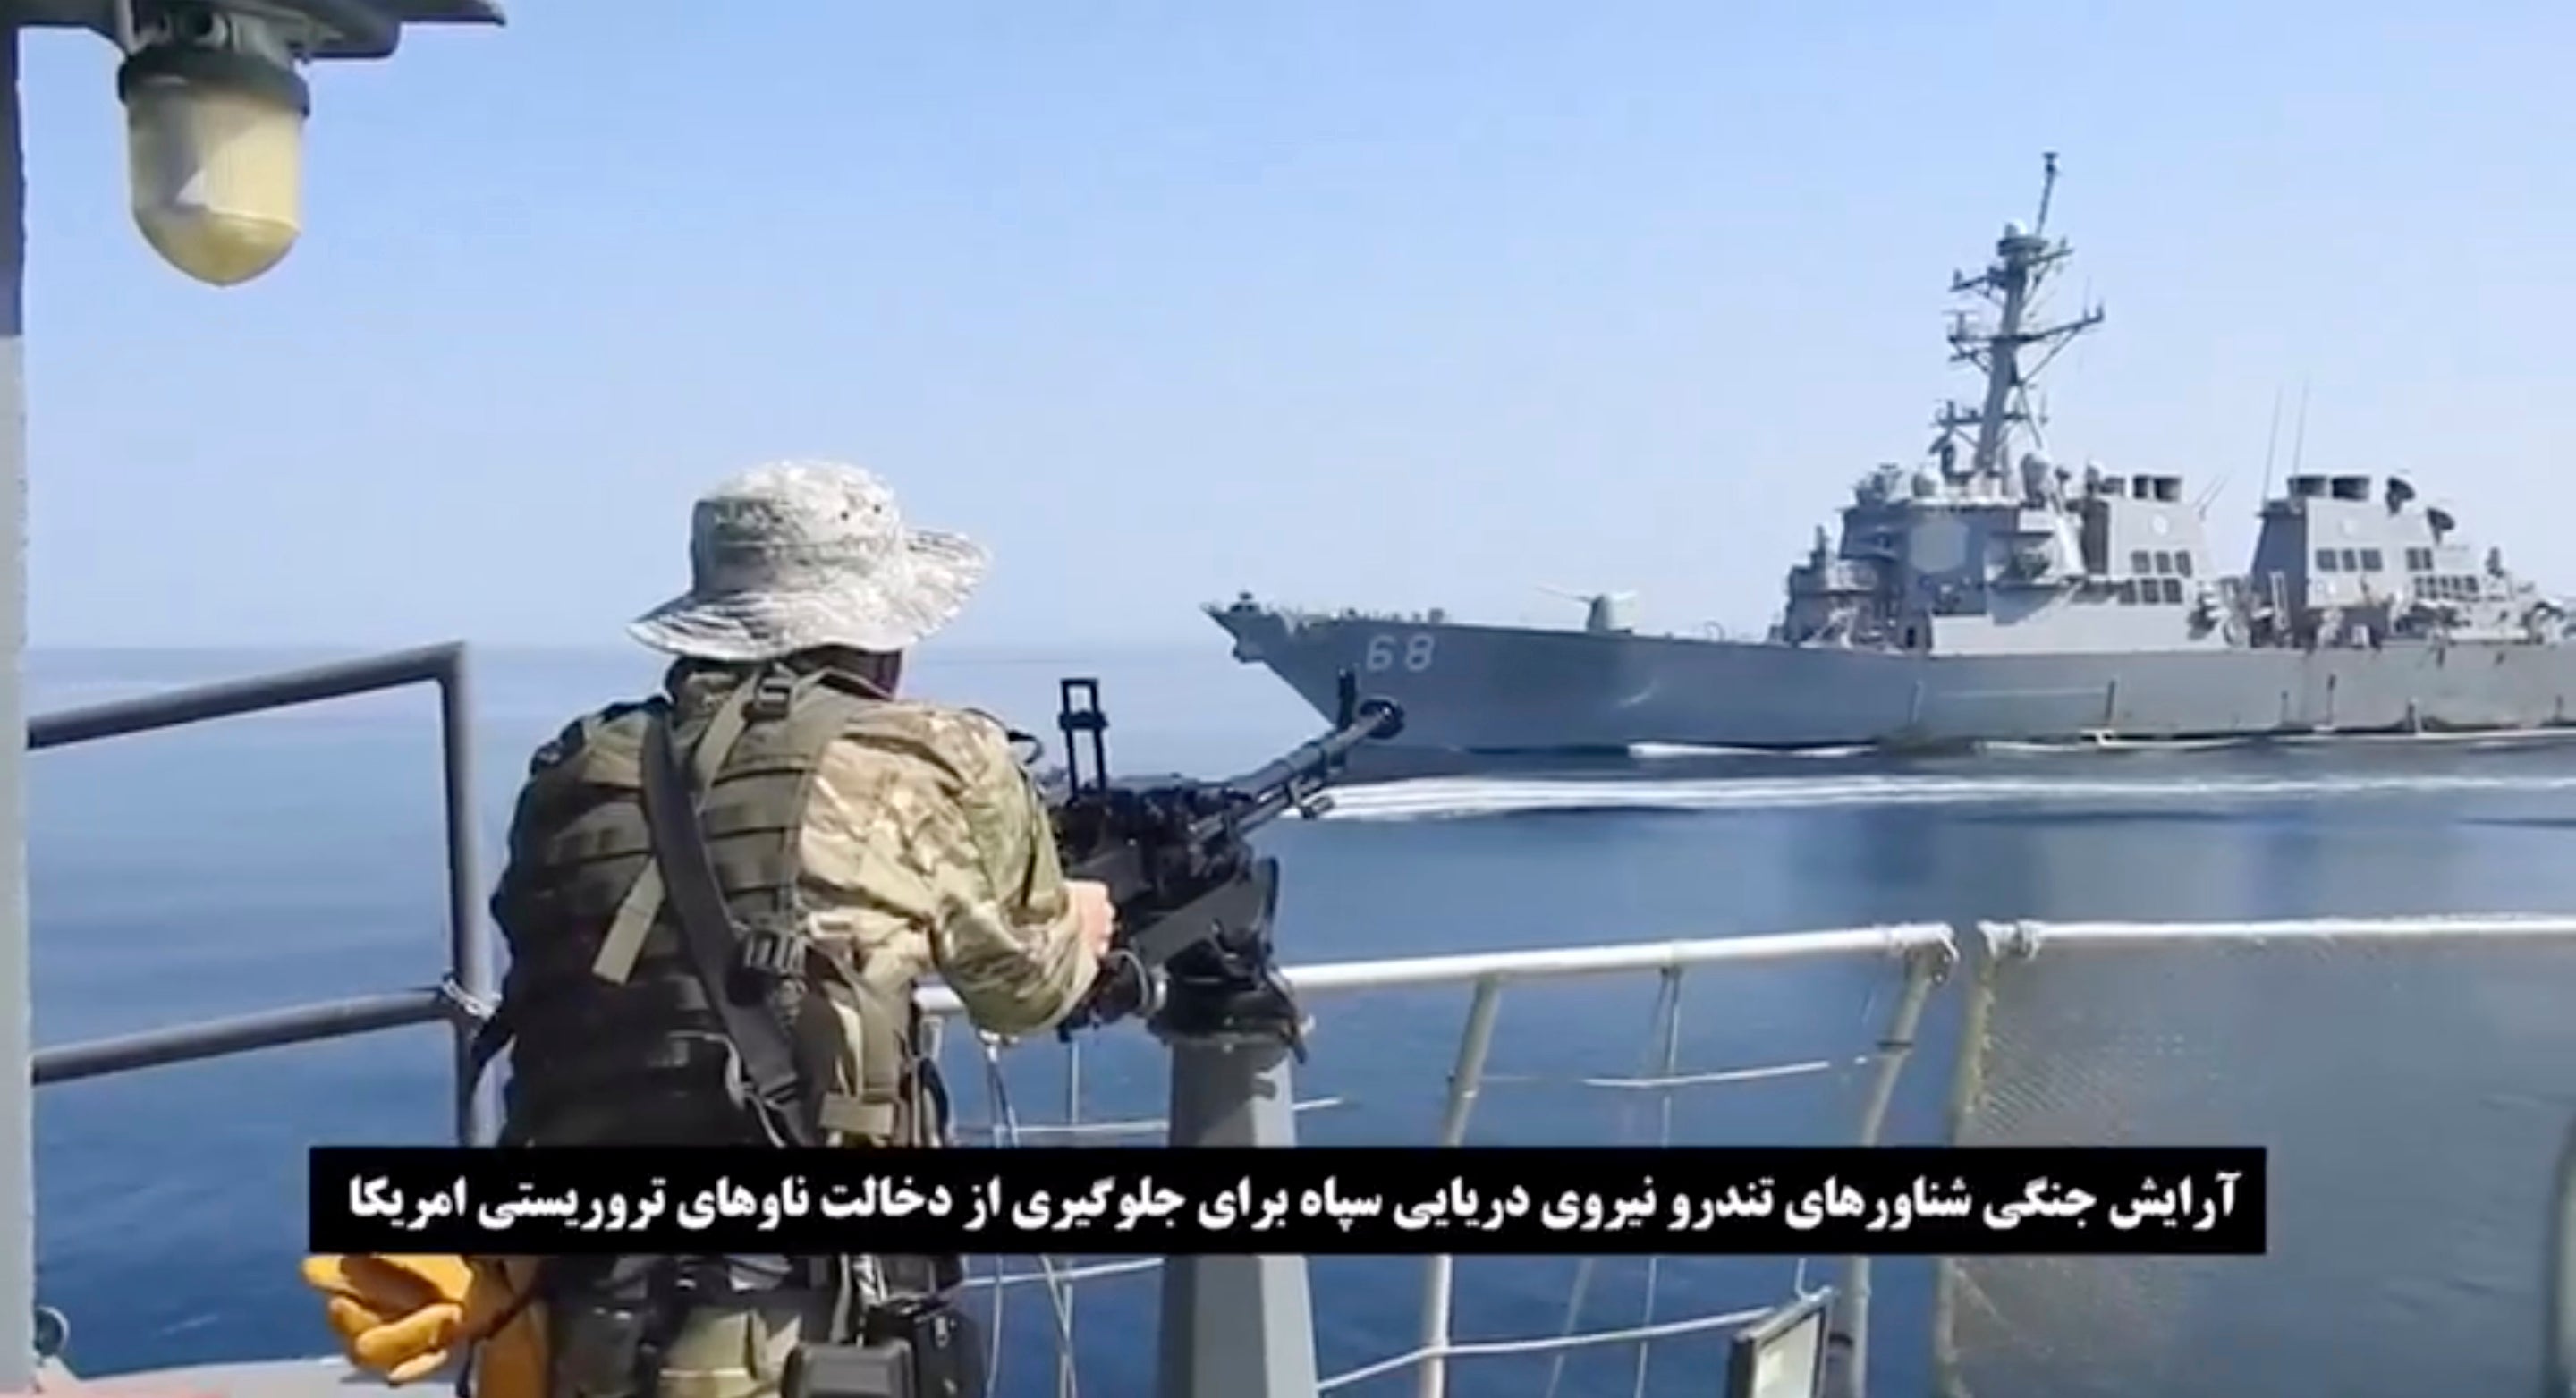 Iran Vietnam Ship Seized